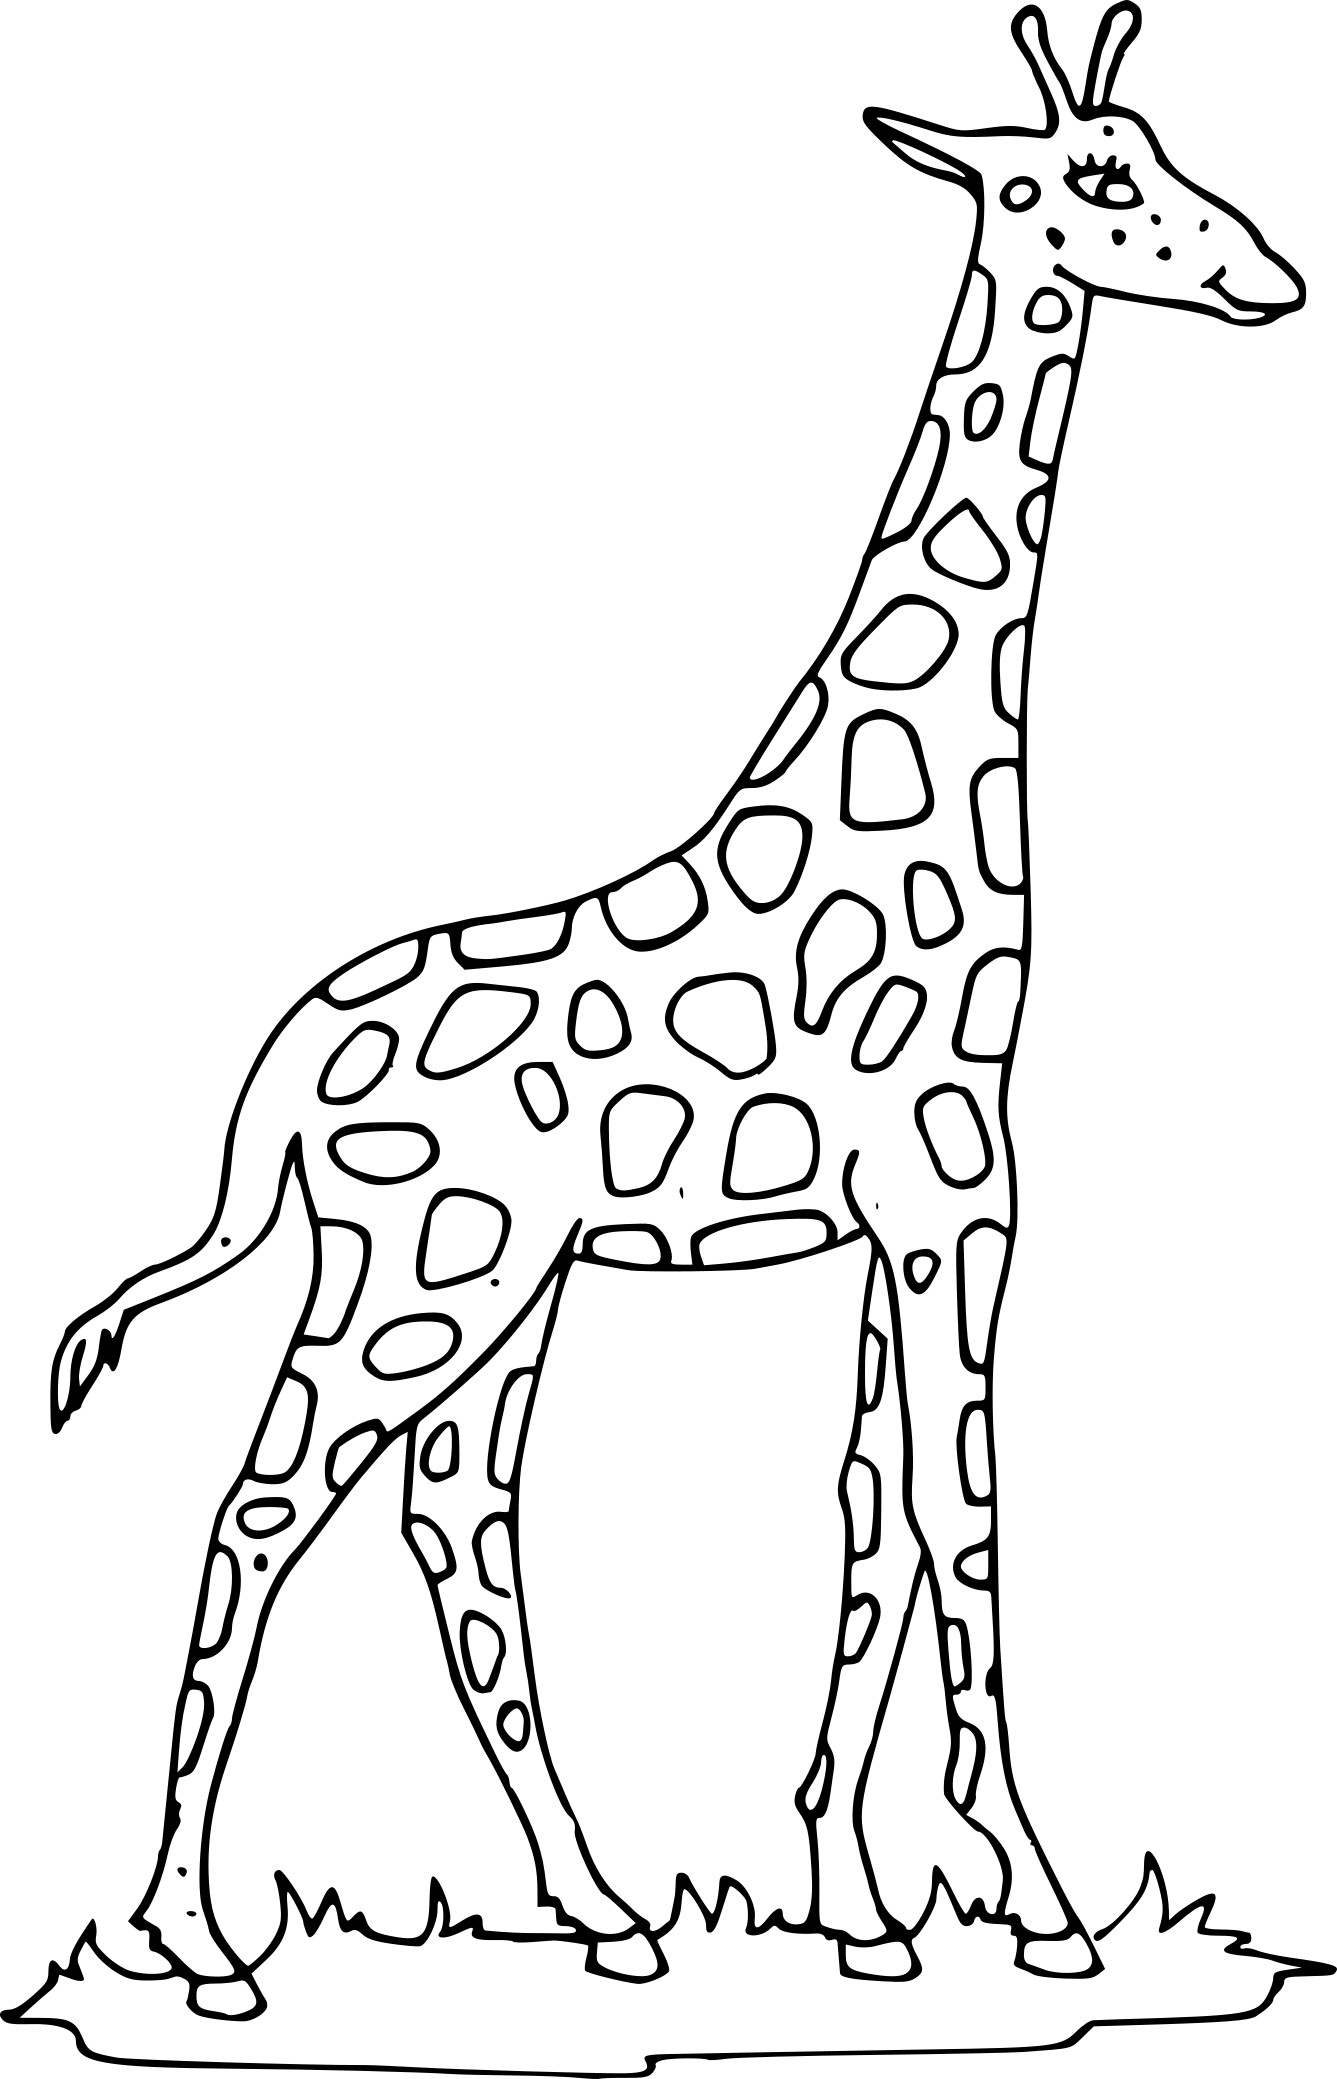 Giraffe coloring page 2